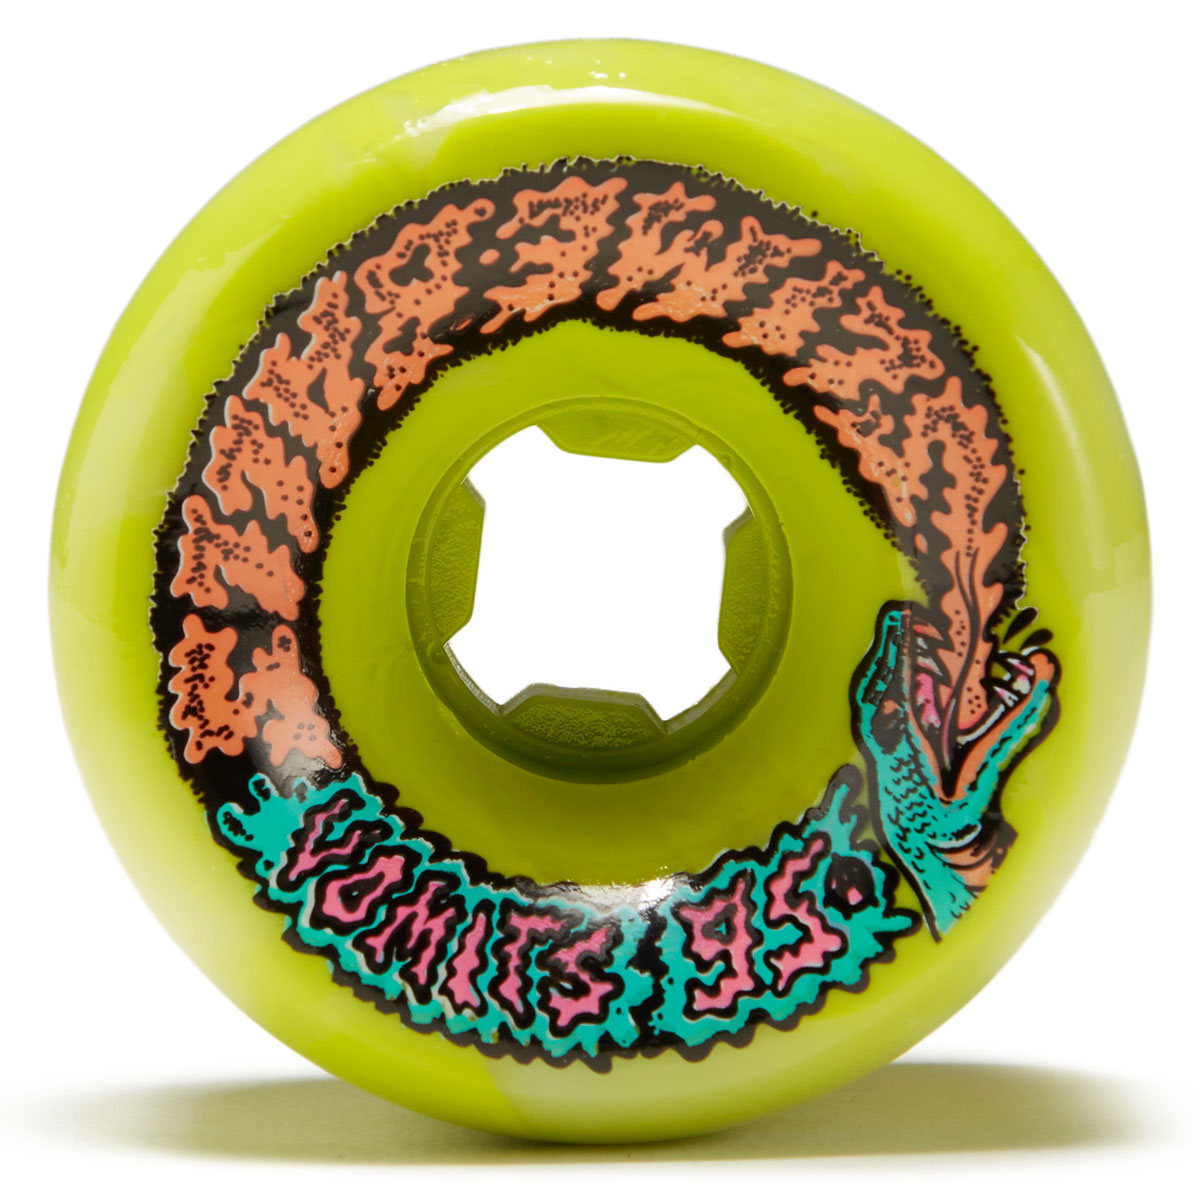 Slime Balls Snake Vomits 95a Skateboard Wheels - Green/White Swirl - 60mm image 1